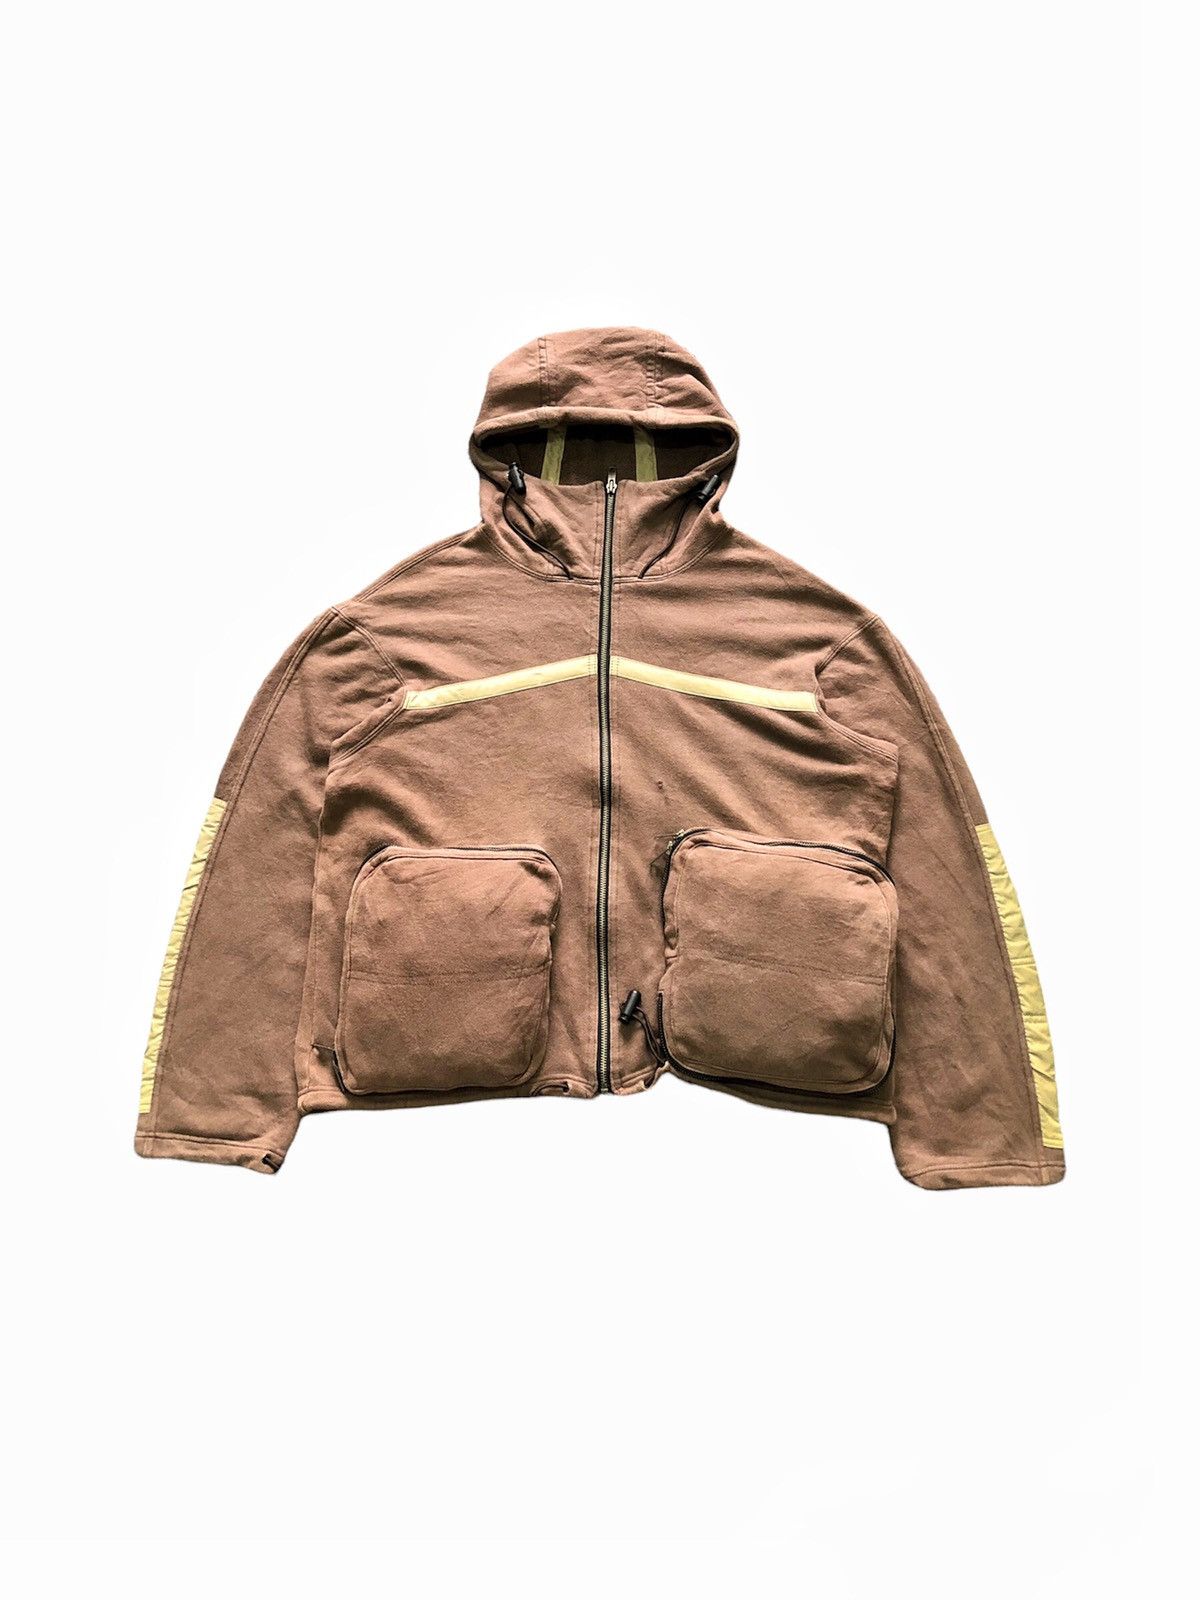 Japanese Brand 2000s Archive Synaps bondage hoodie zipper jacket